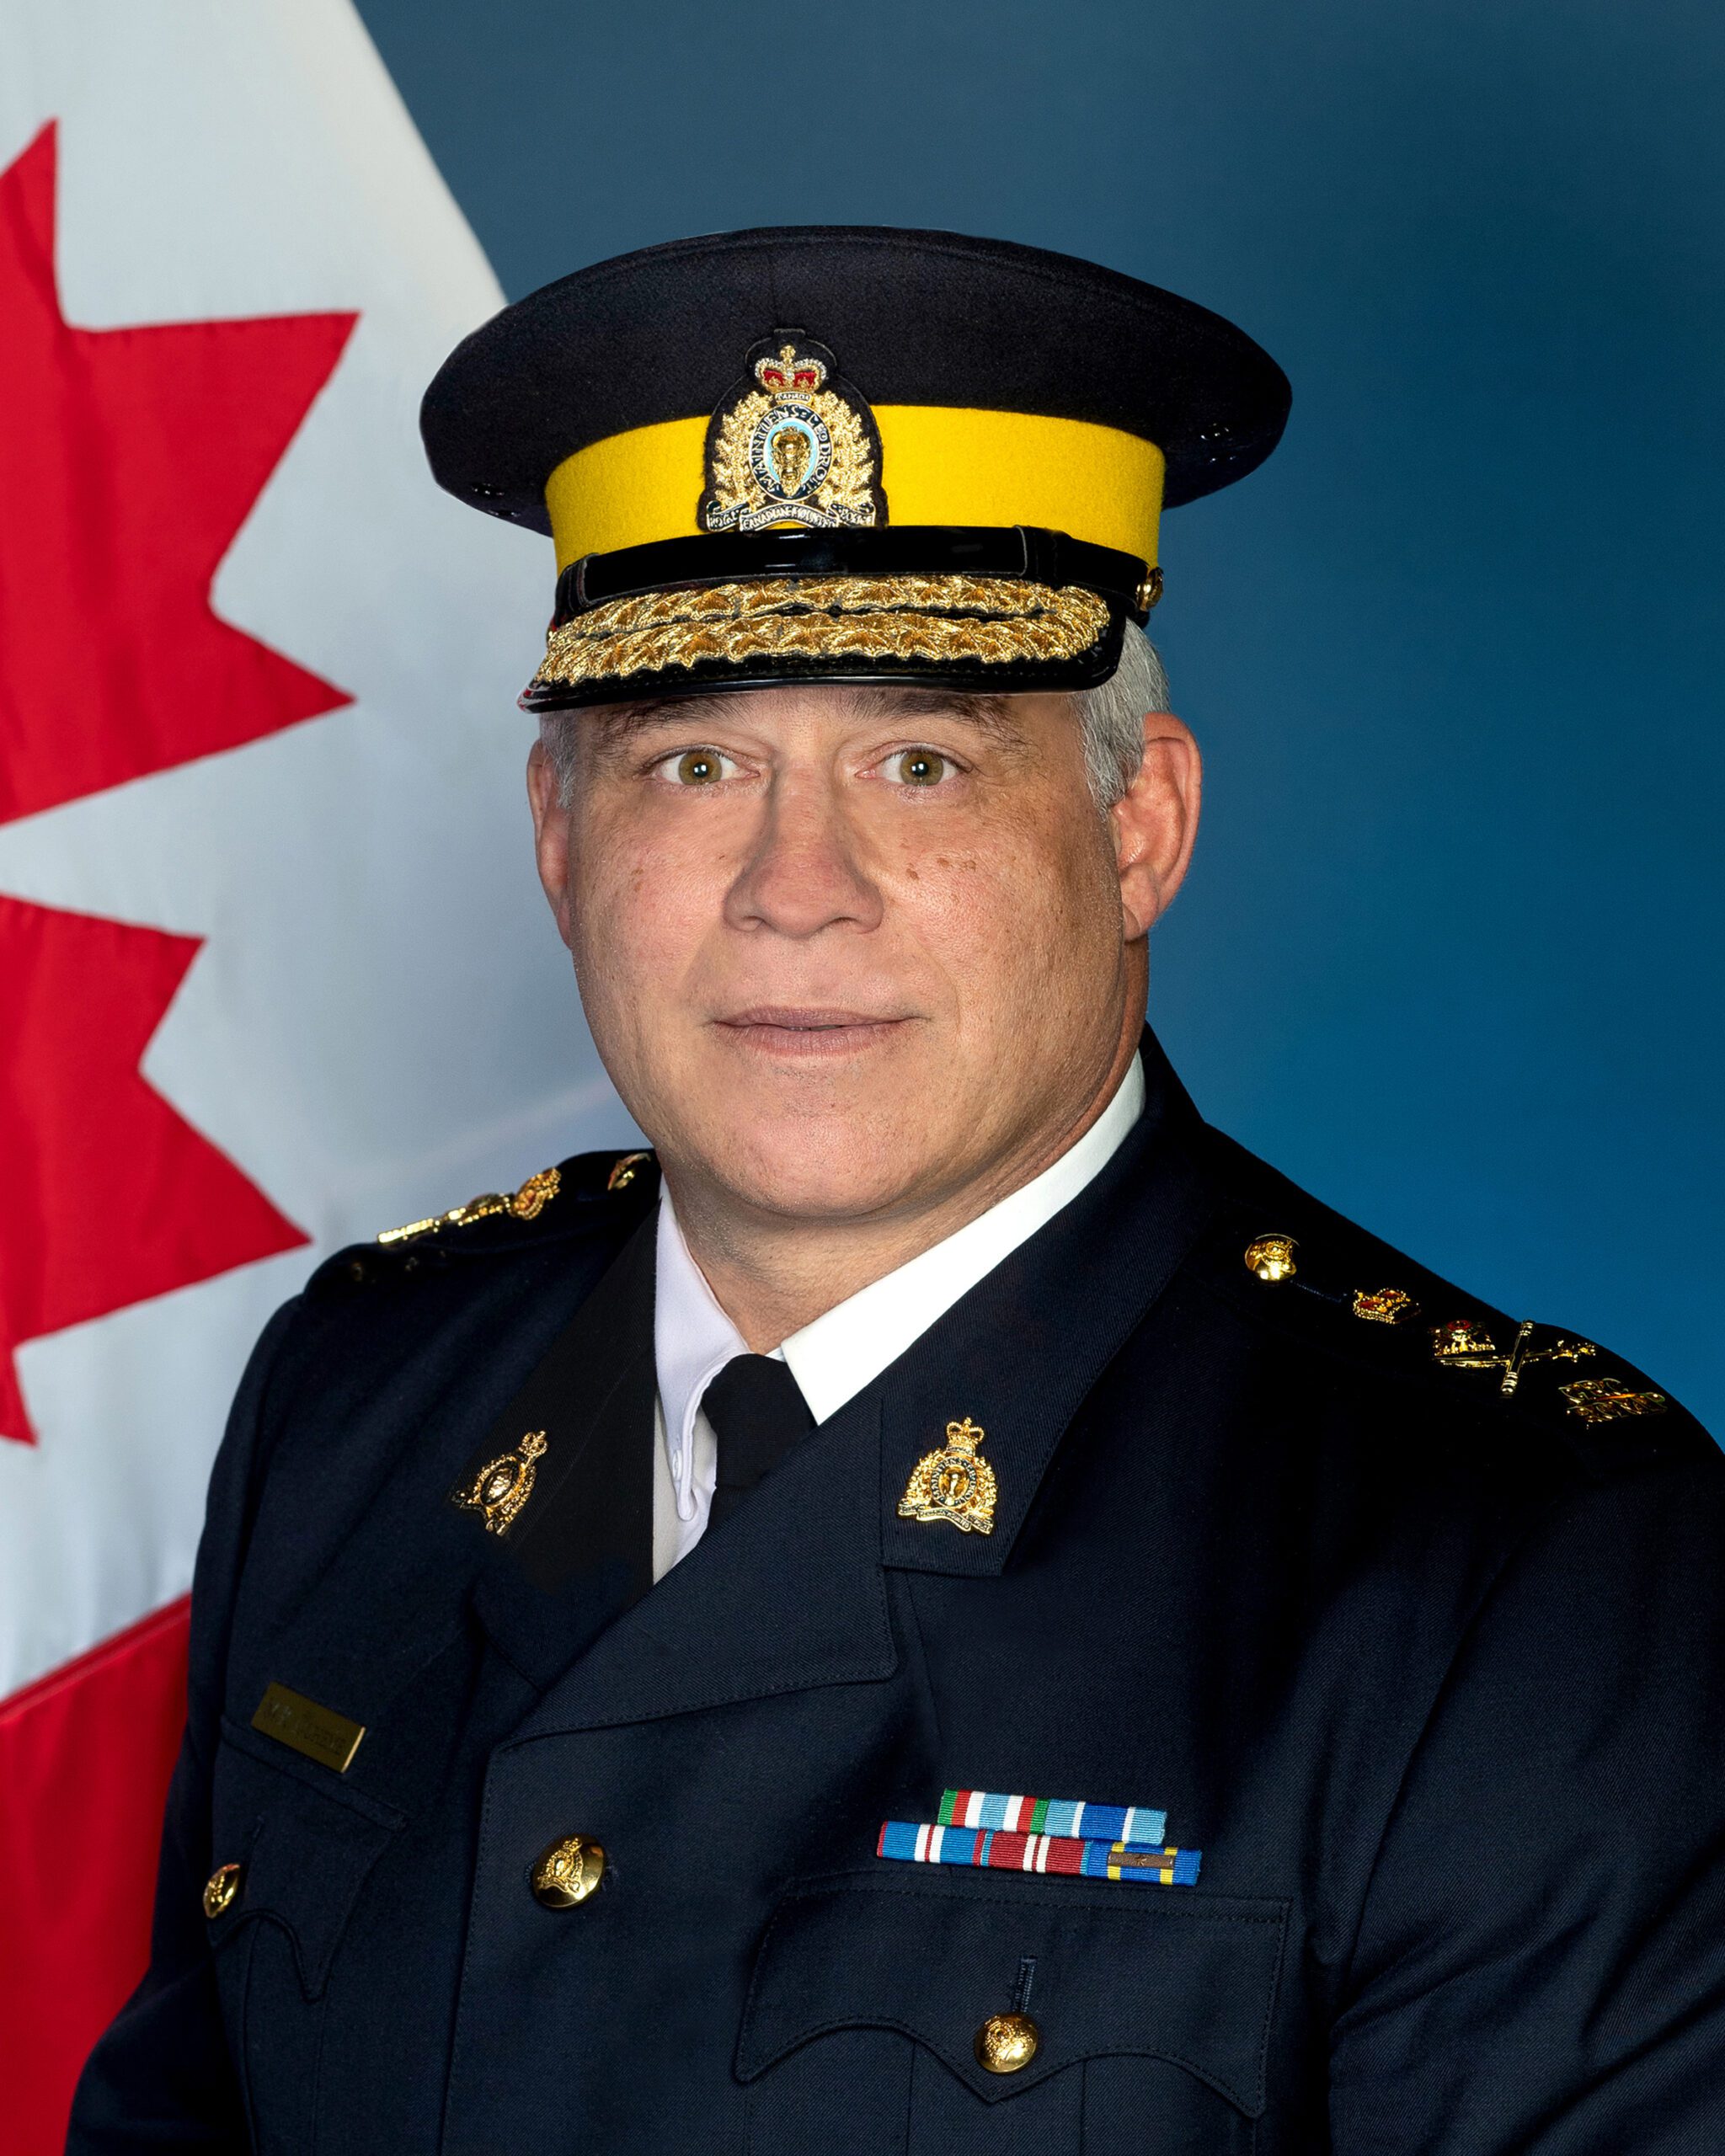 Mike Duheme, Commissioner, RCMP